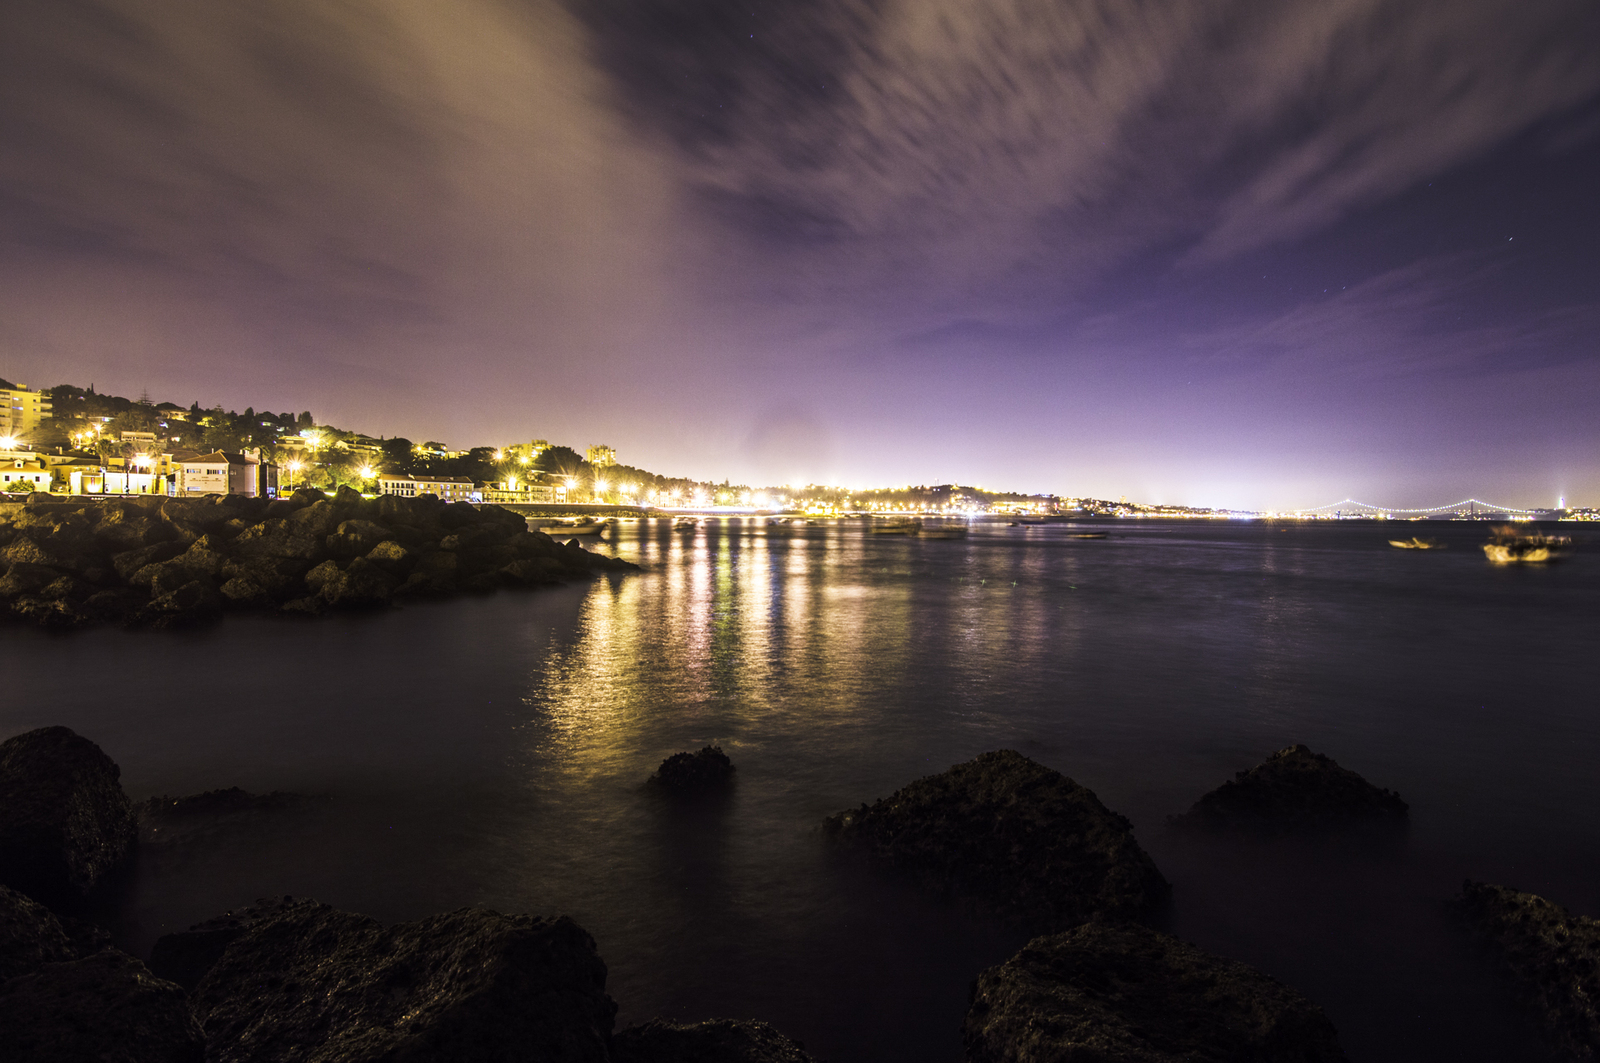 The city falls asleep. - My, Town, Night, Portugal, Nikon, Landscape, Longpost